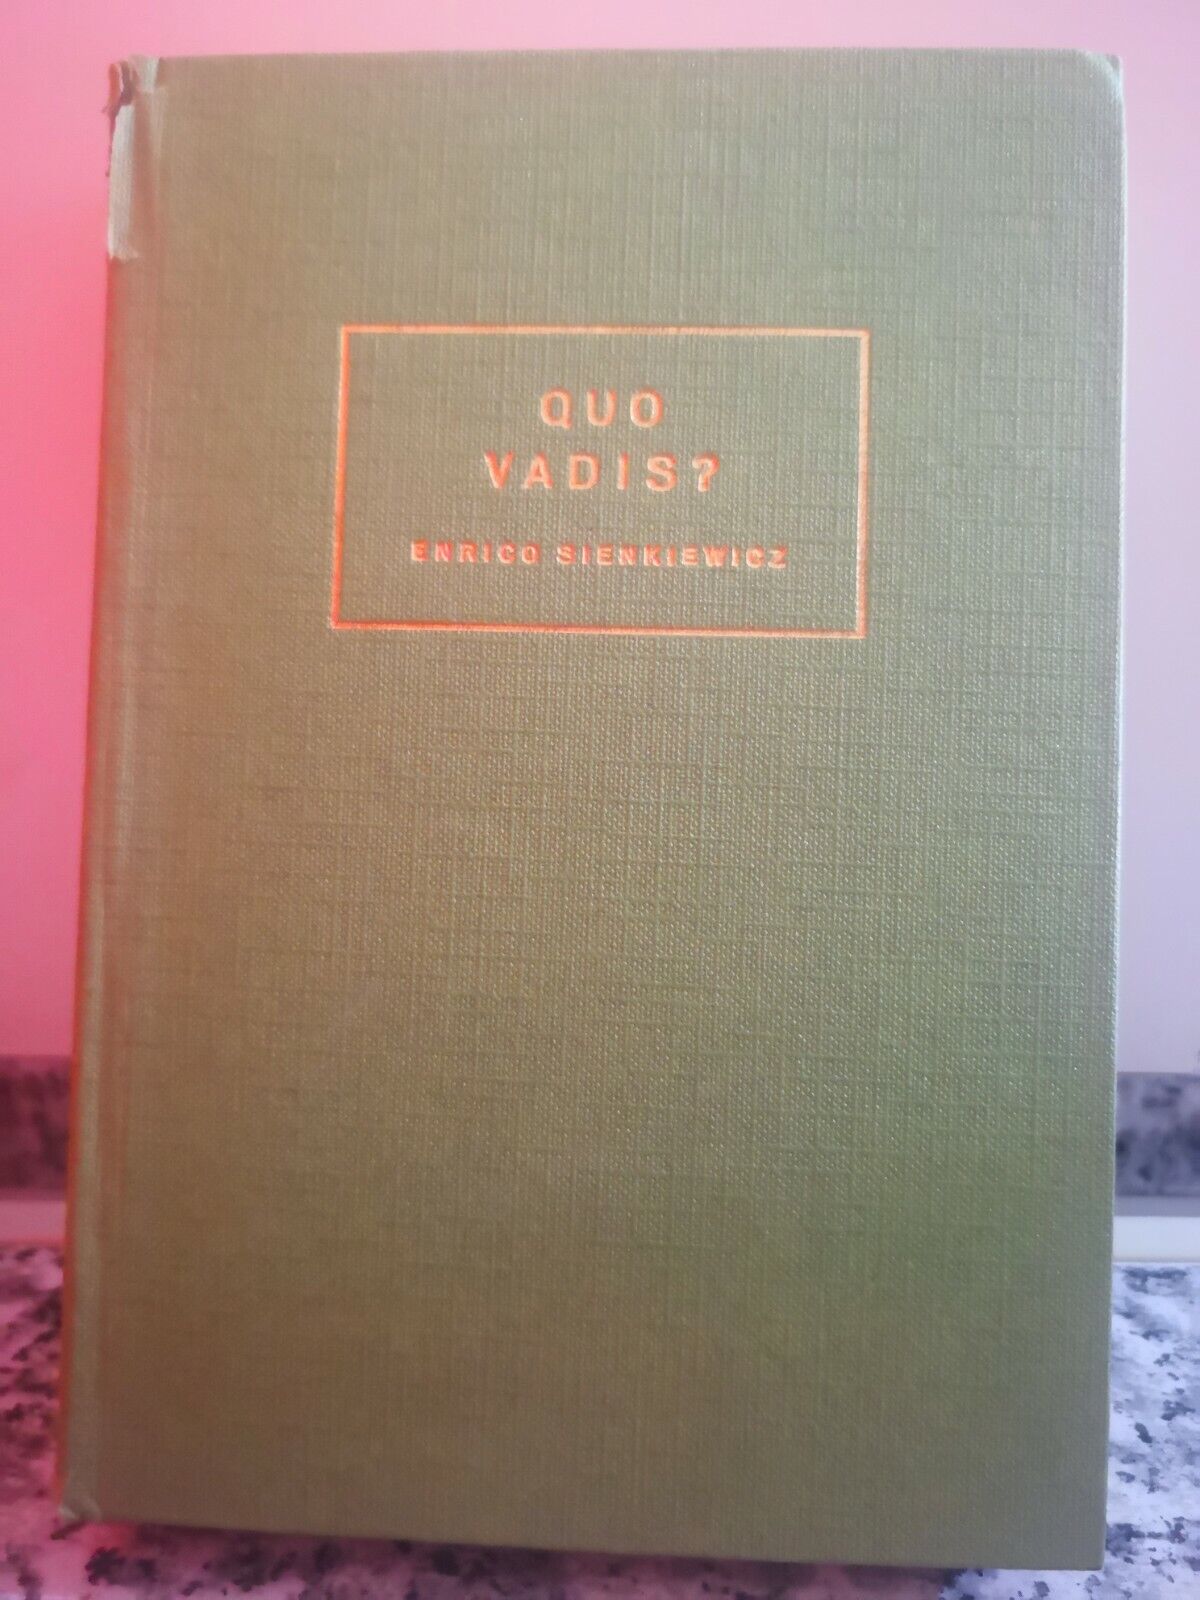   Quo vadis ?  di Enrico Sienkiewigz,  1963,  Vallardi -F